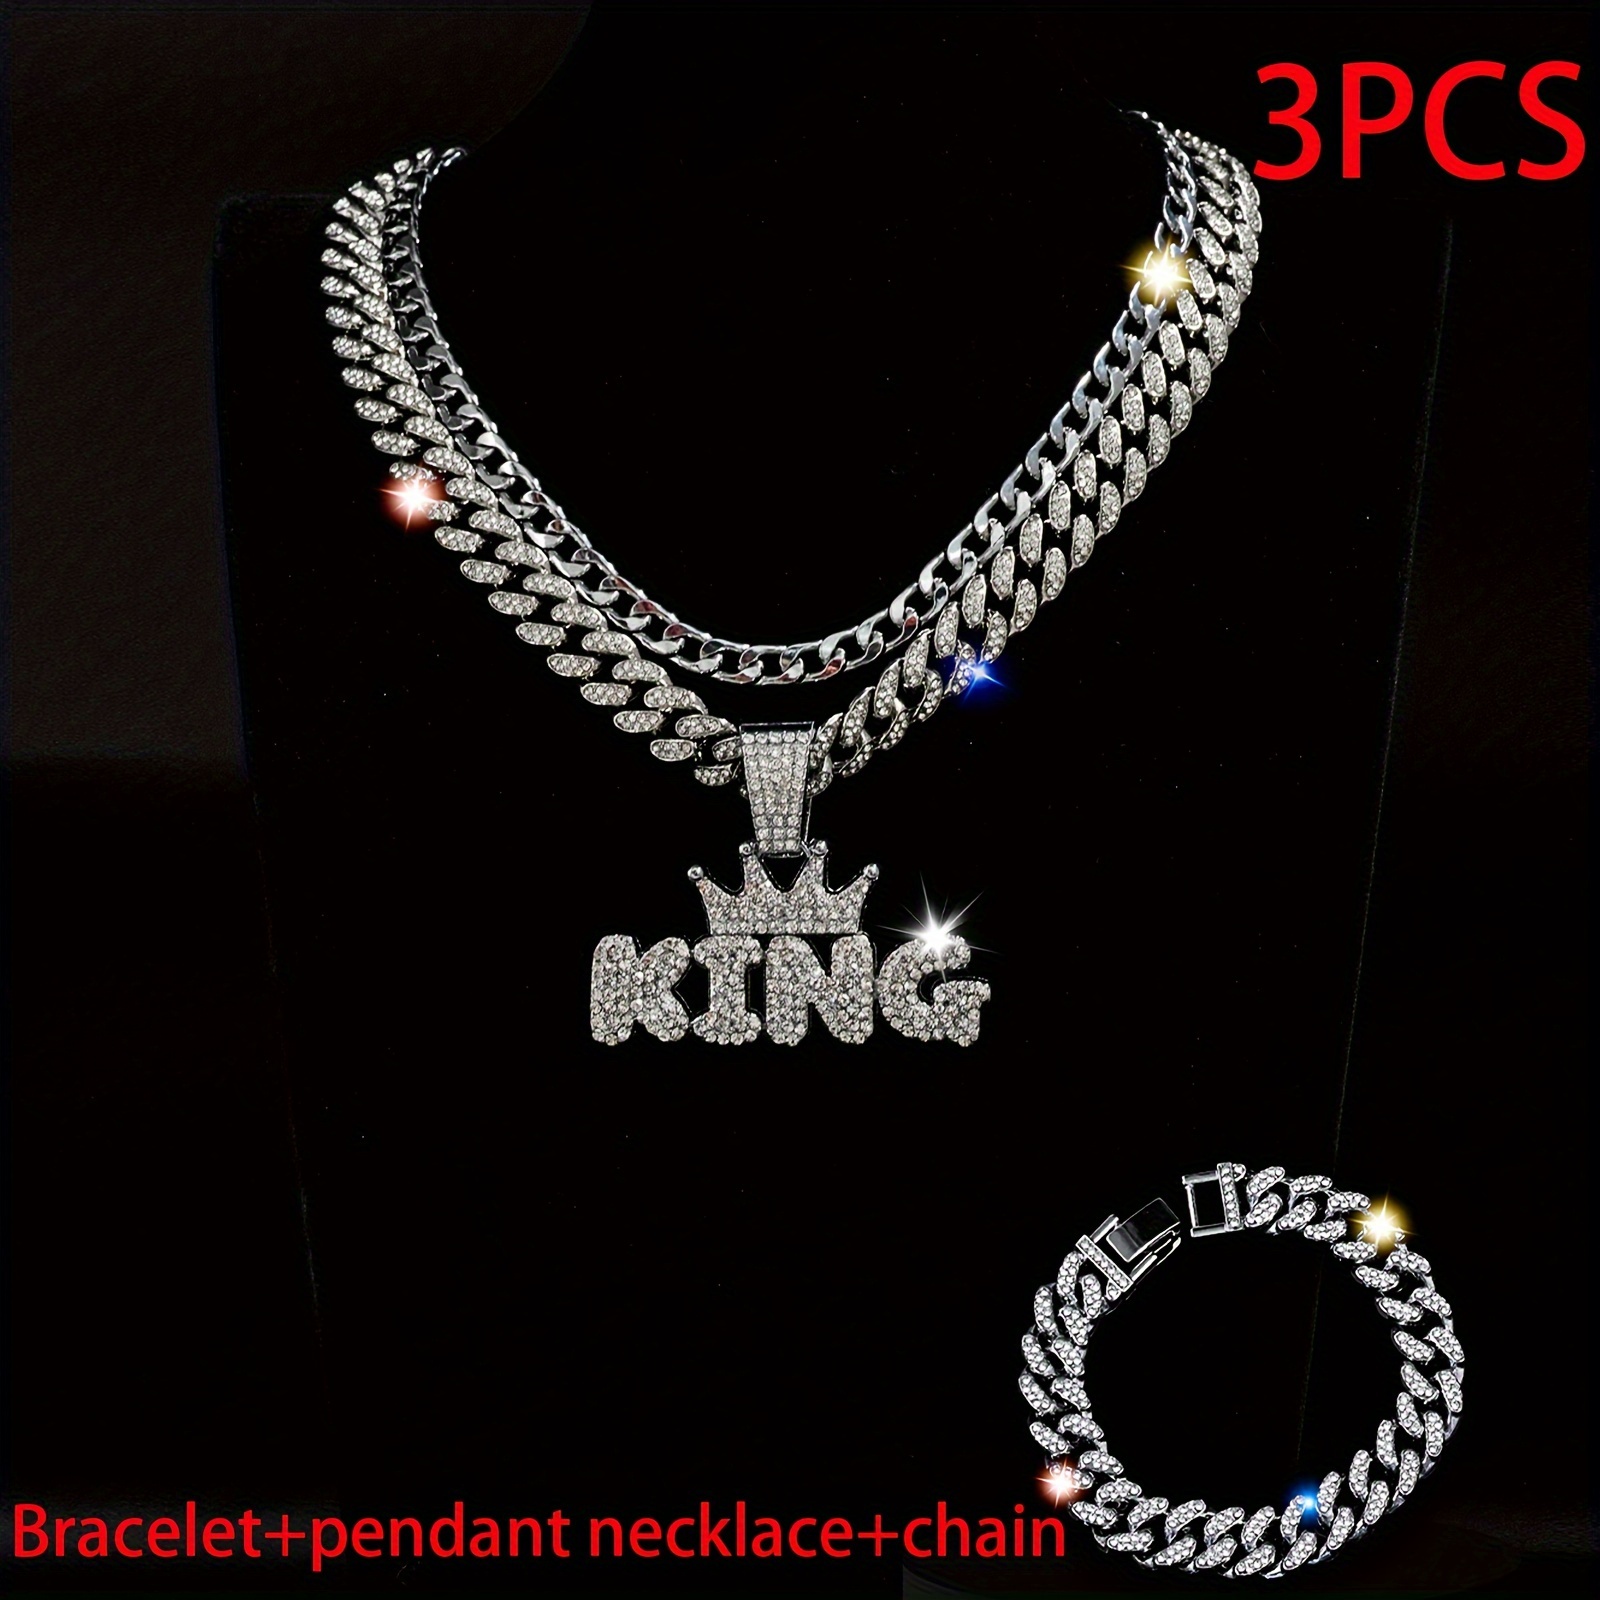 

3pcs Miami Punk Hip-hop Crown Letter King Pendant Cuban Chain Necklace Bracelet Inlaid Rhinestones, Unisex Neck Jewelry Gift